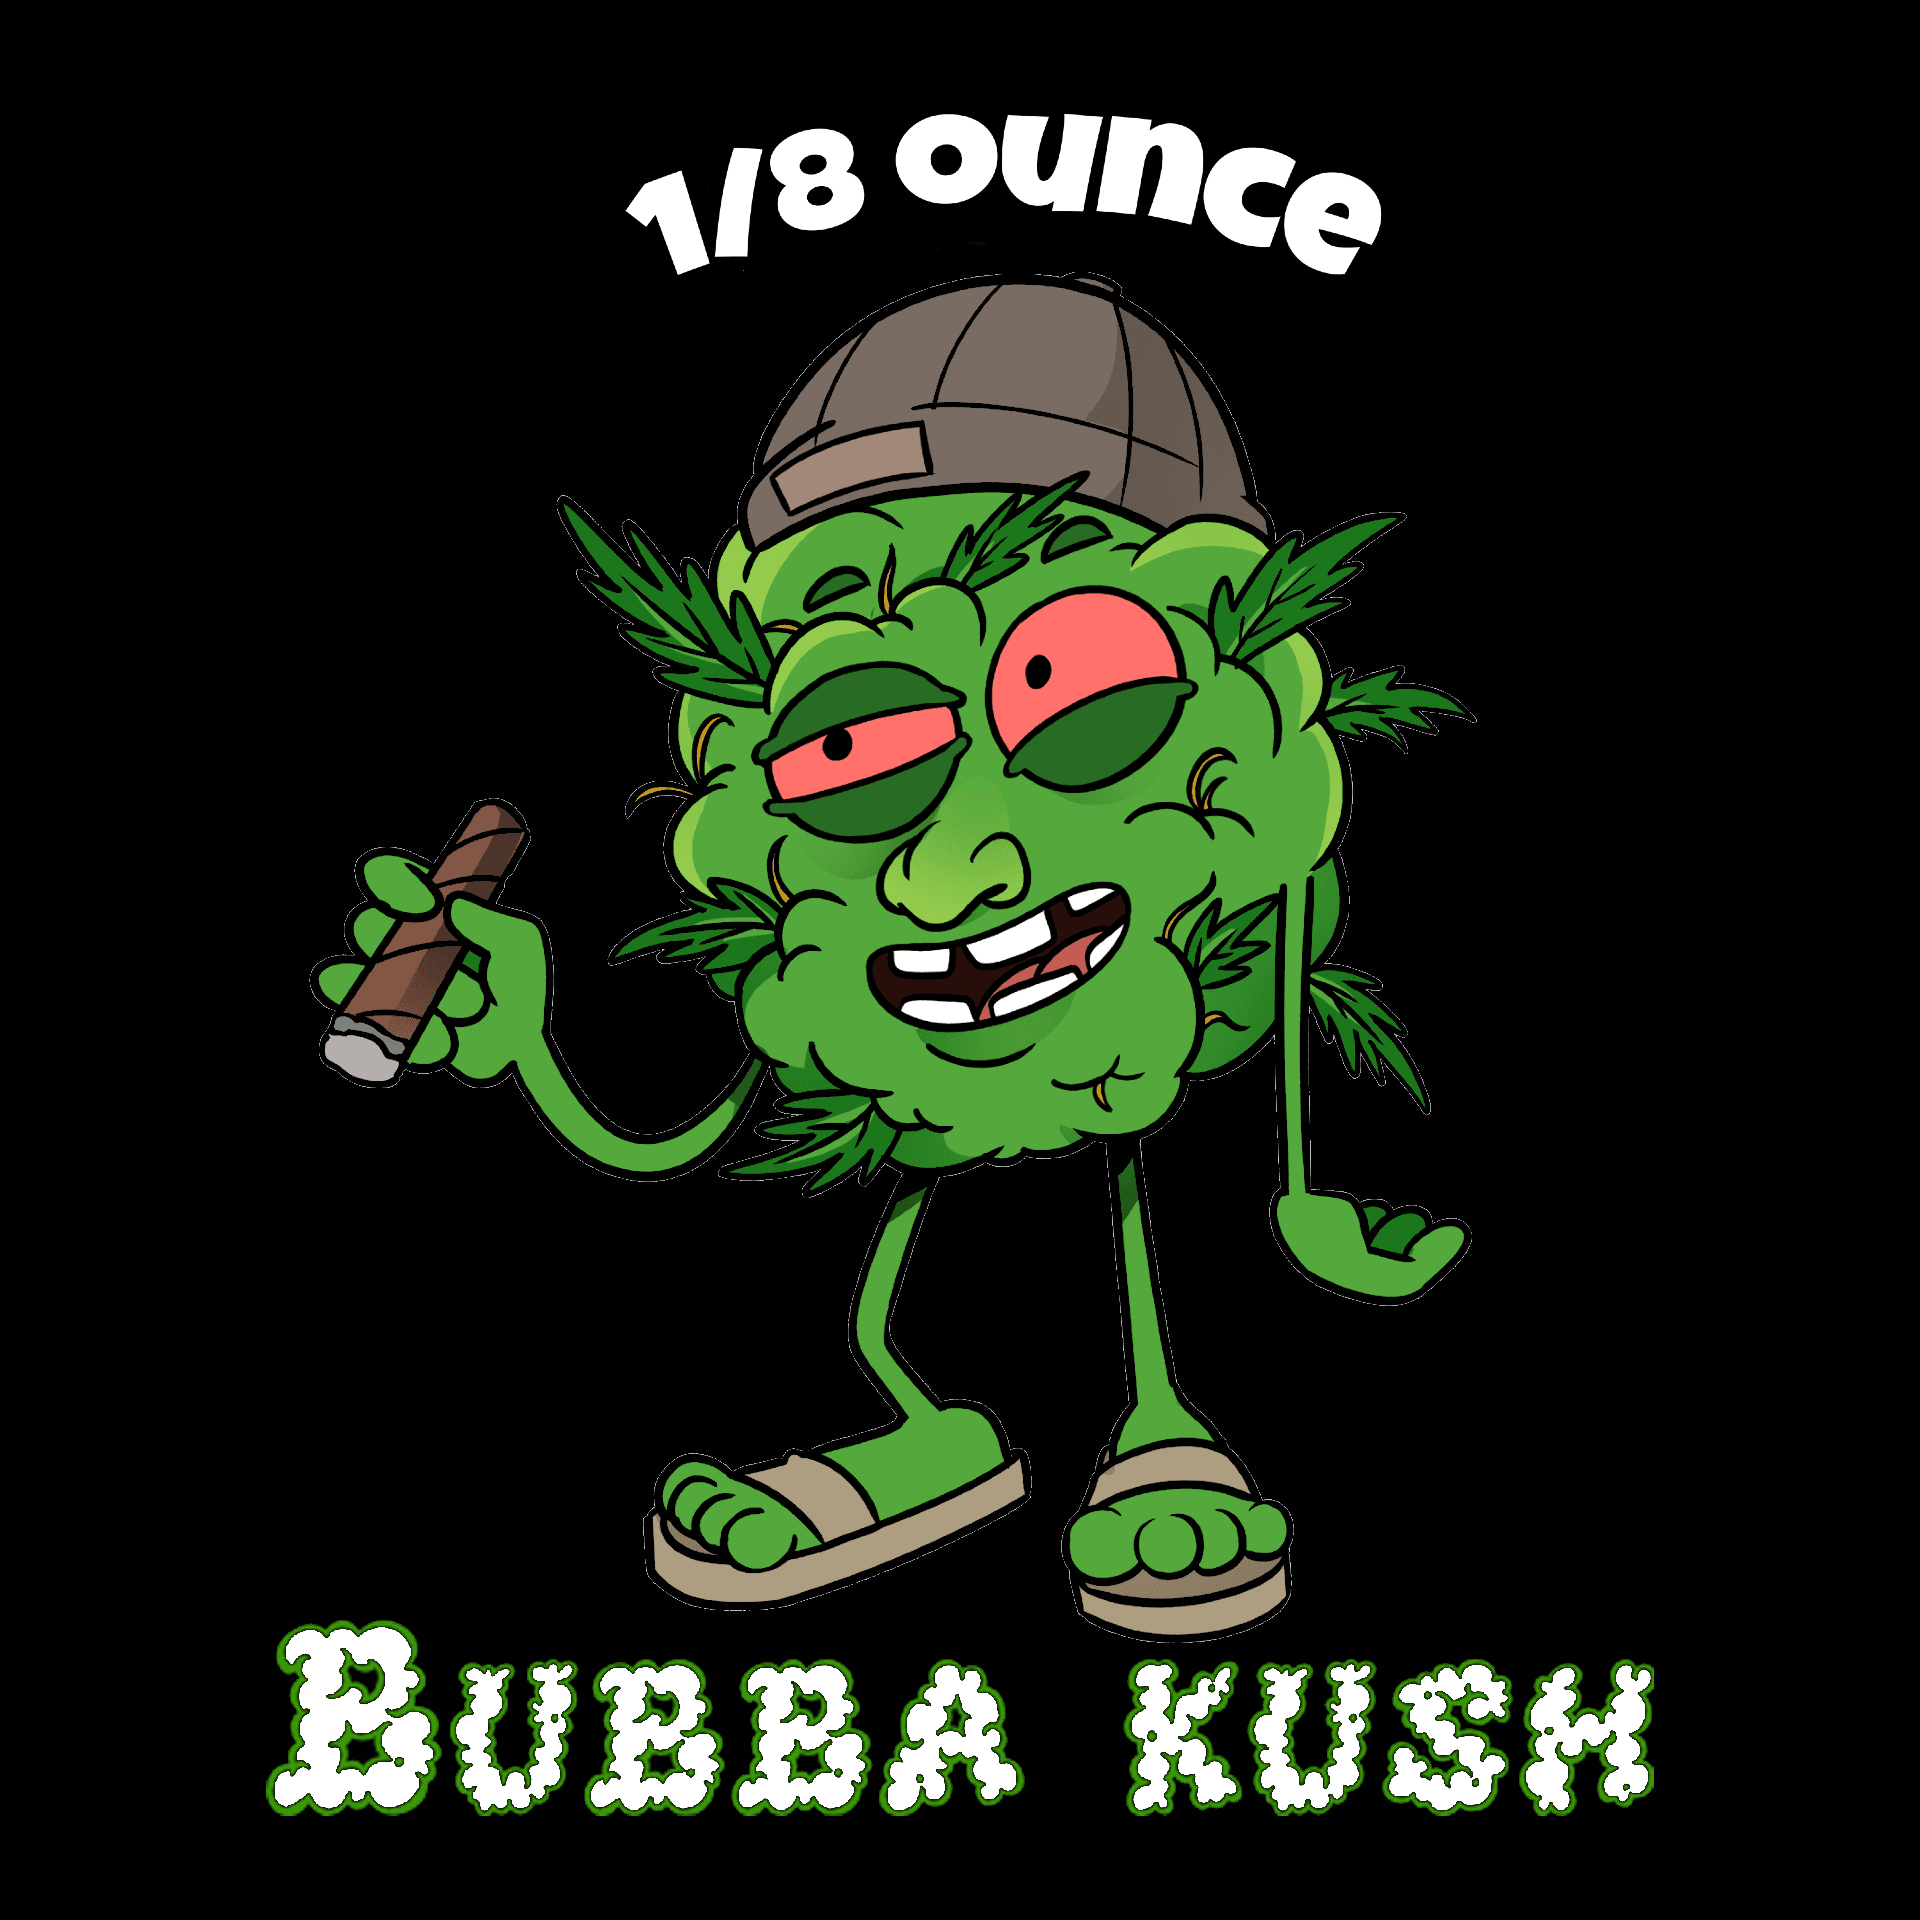 Bubba Kush 1/8 Ounce